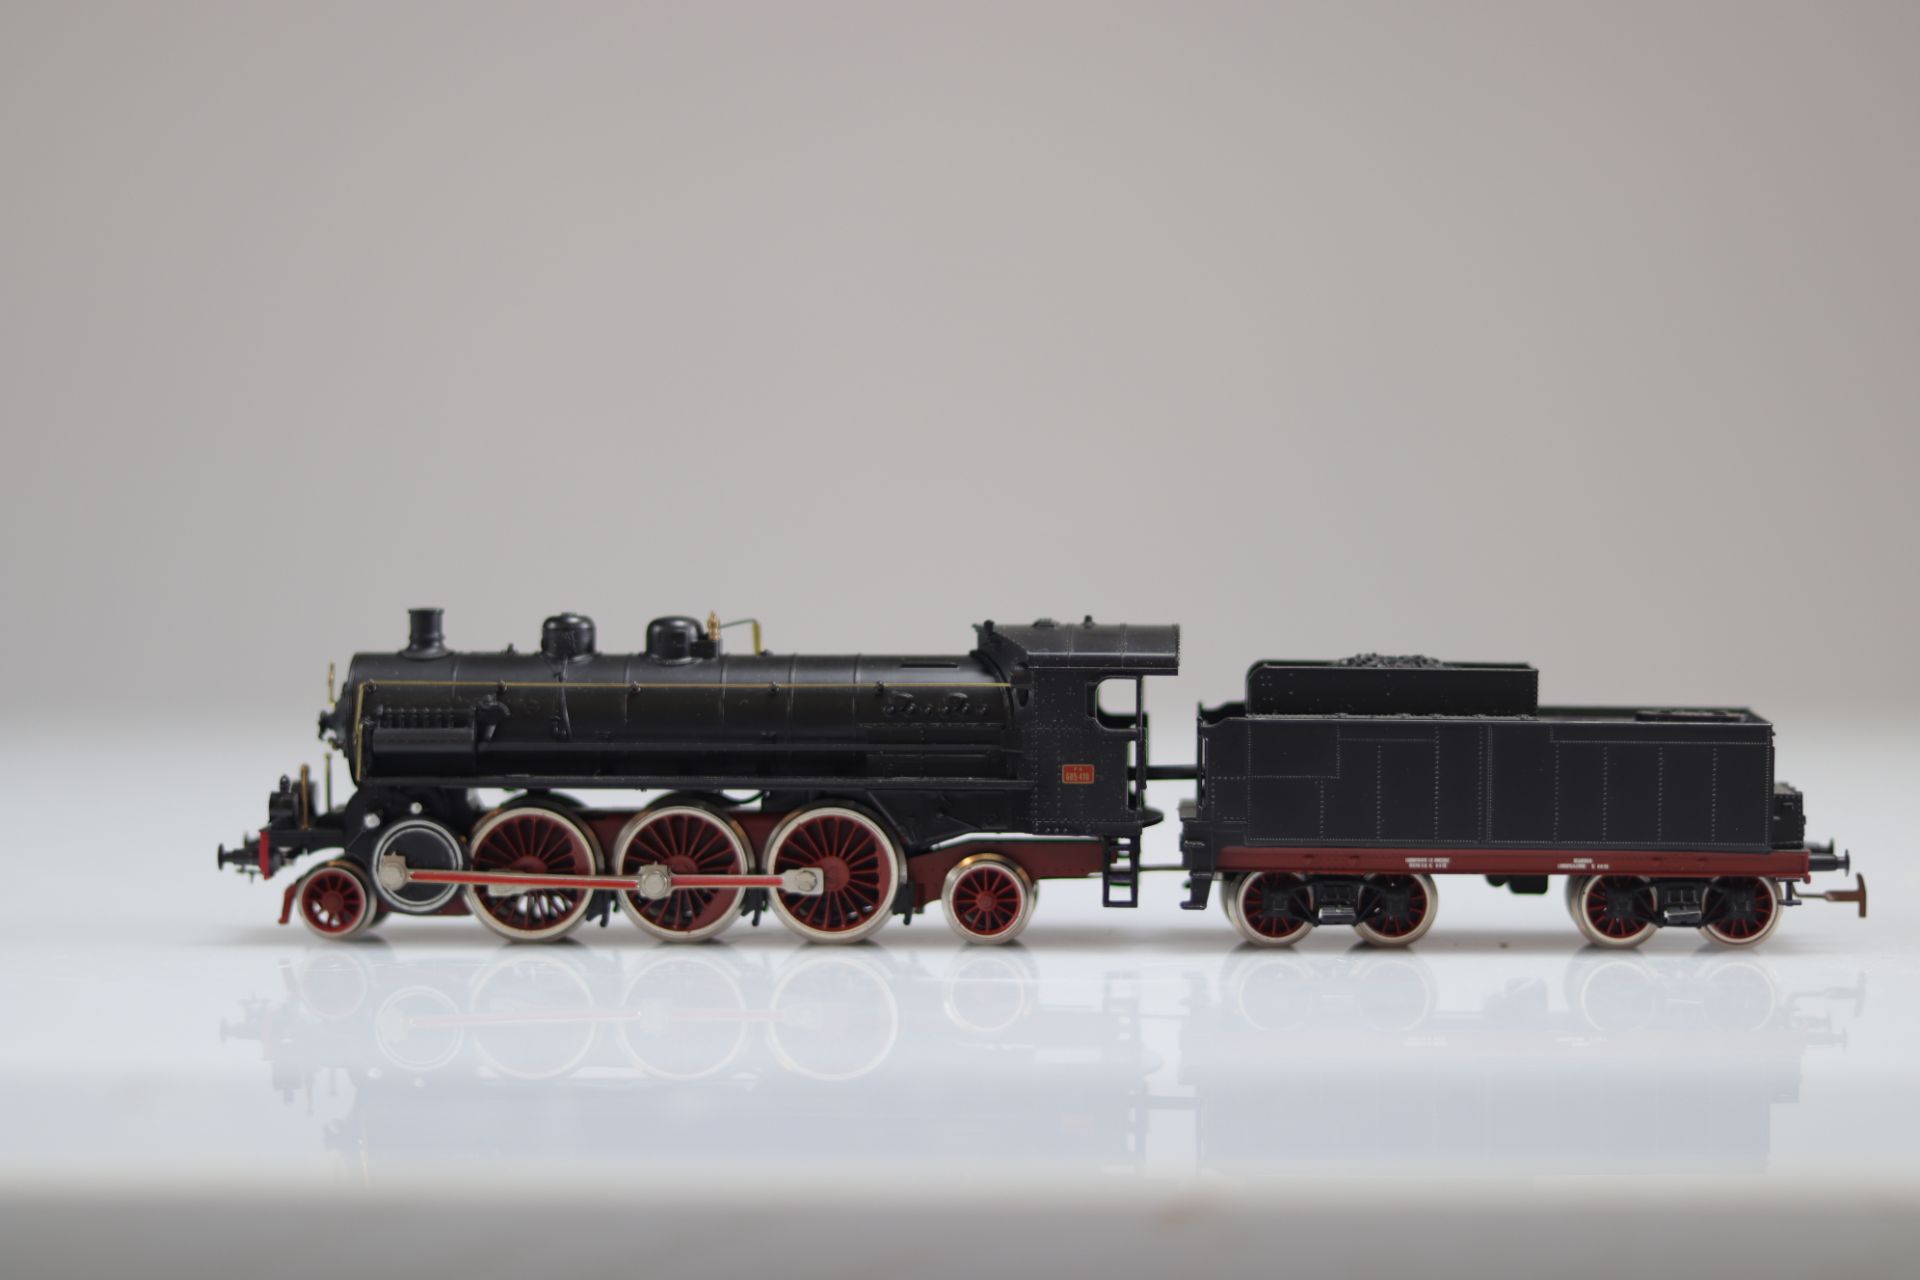 Rivarossi locomotive / Reference: - / Type: steam 2-6-2 #685470